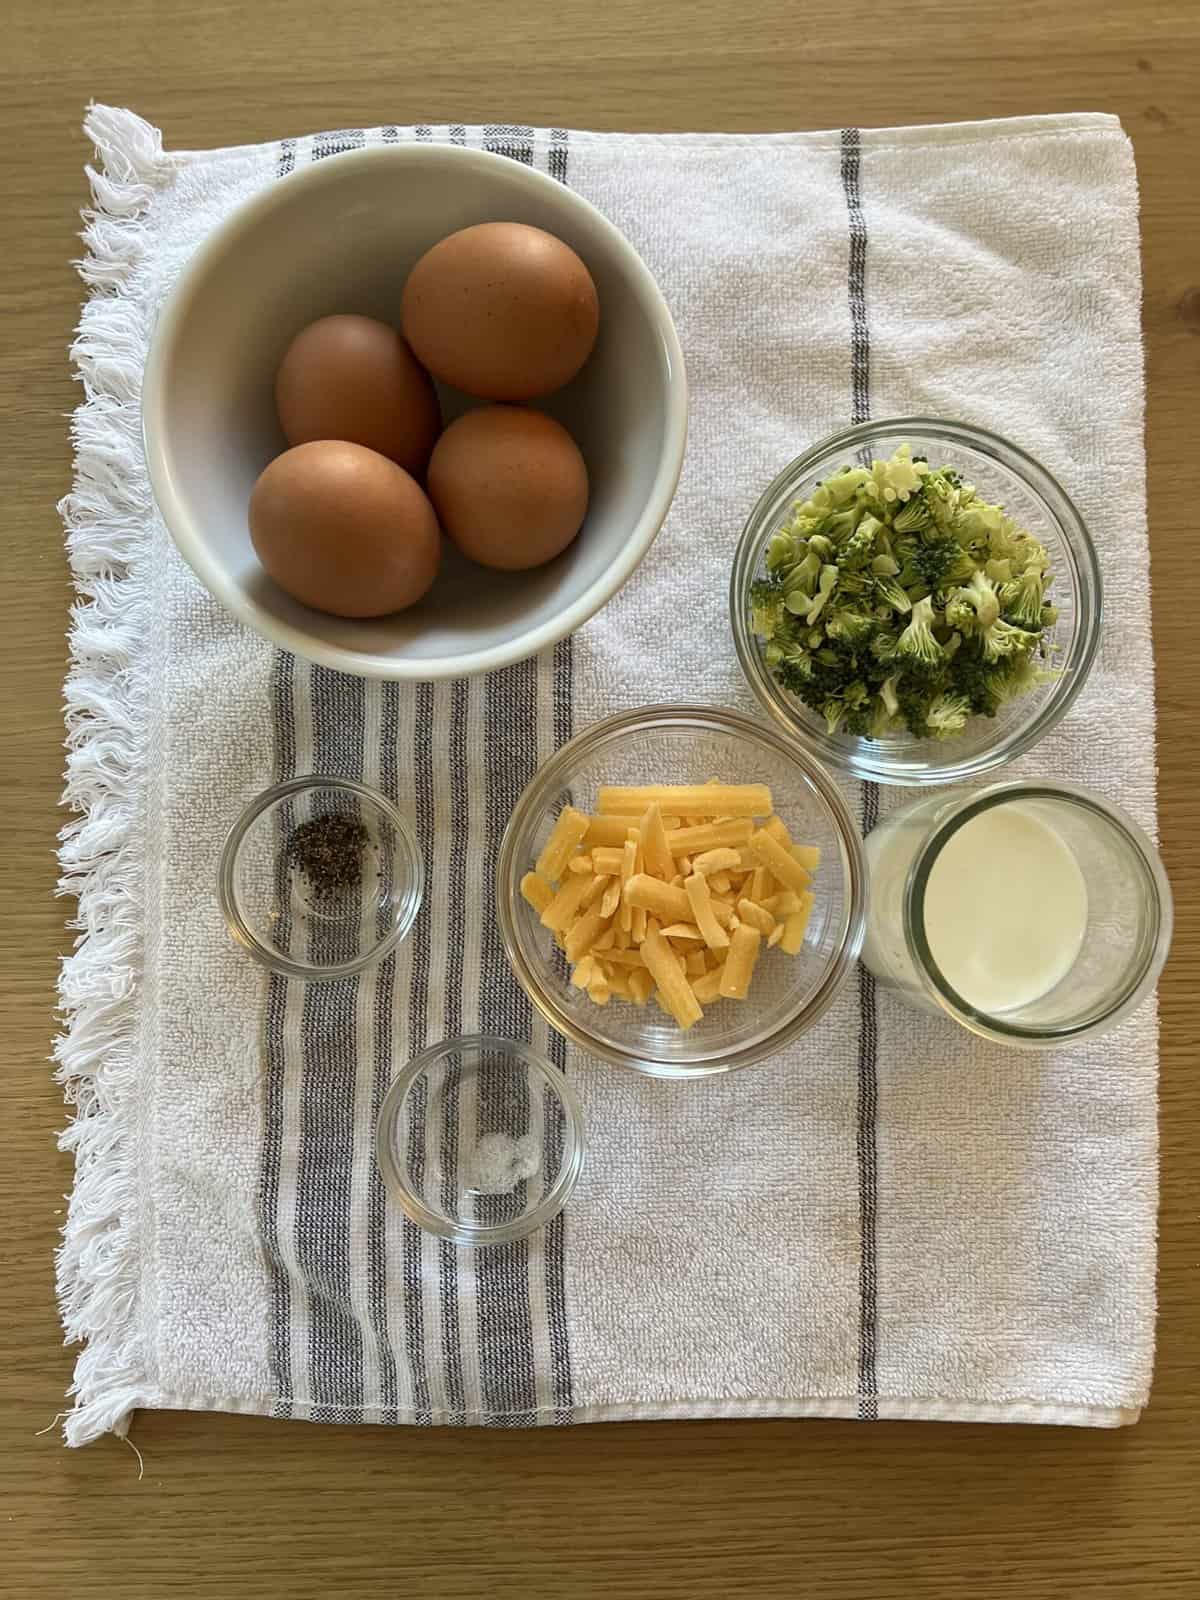 Instant pot egg bite ingredients